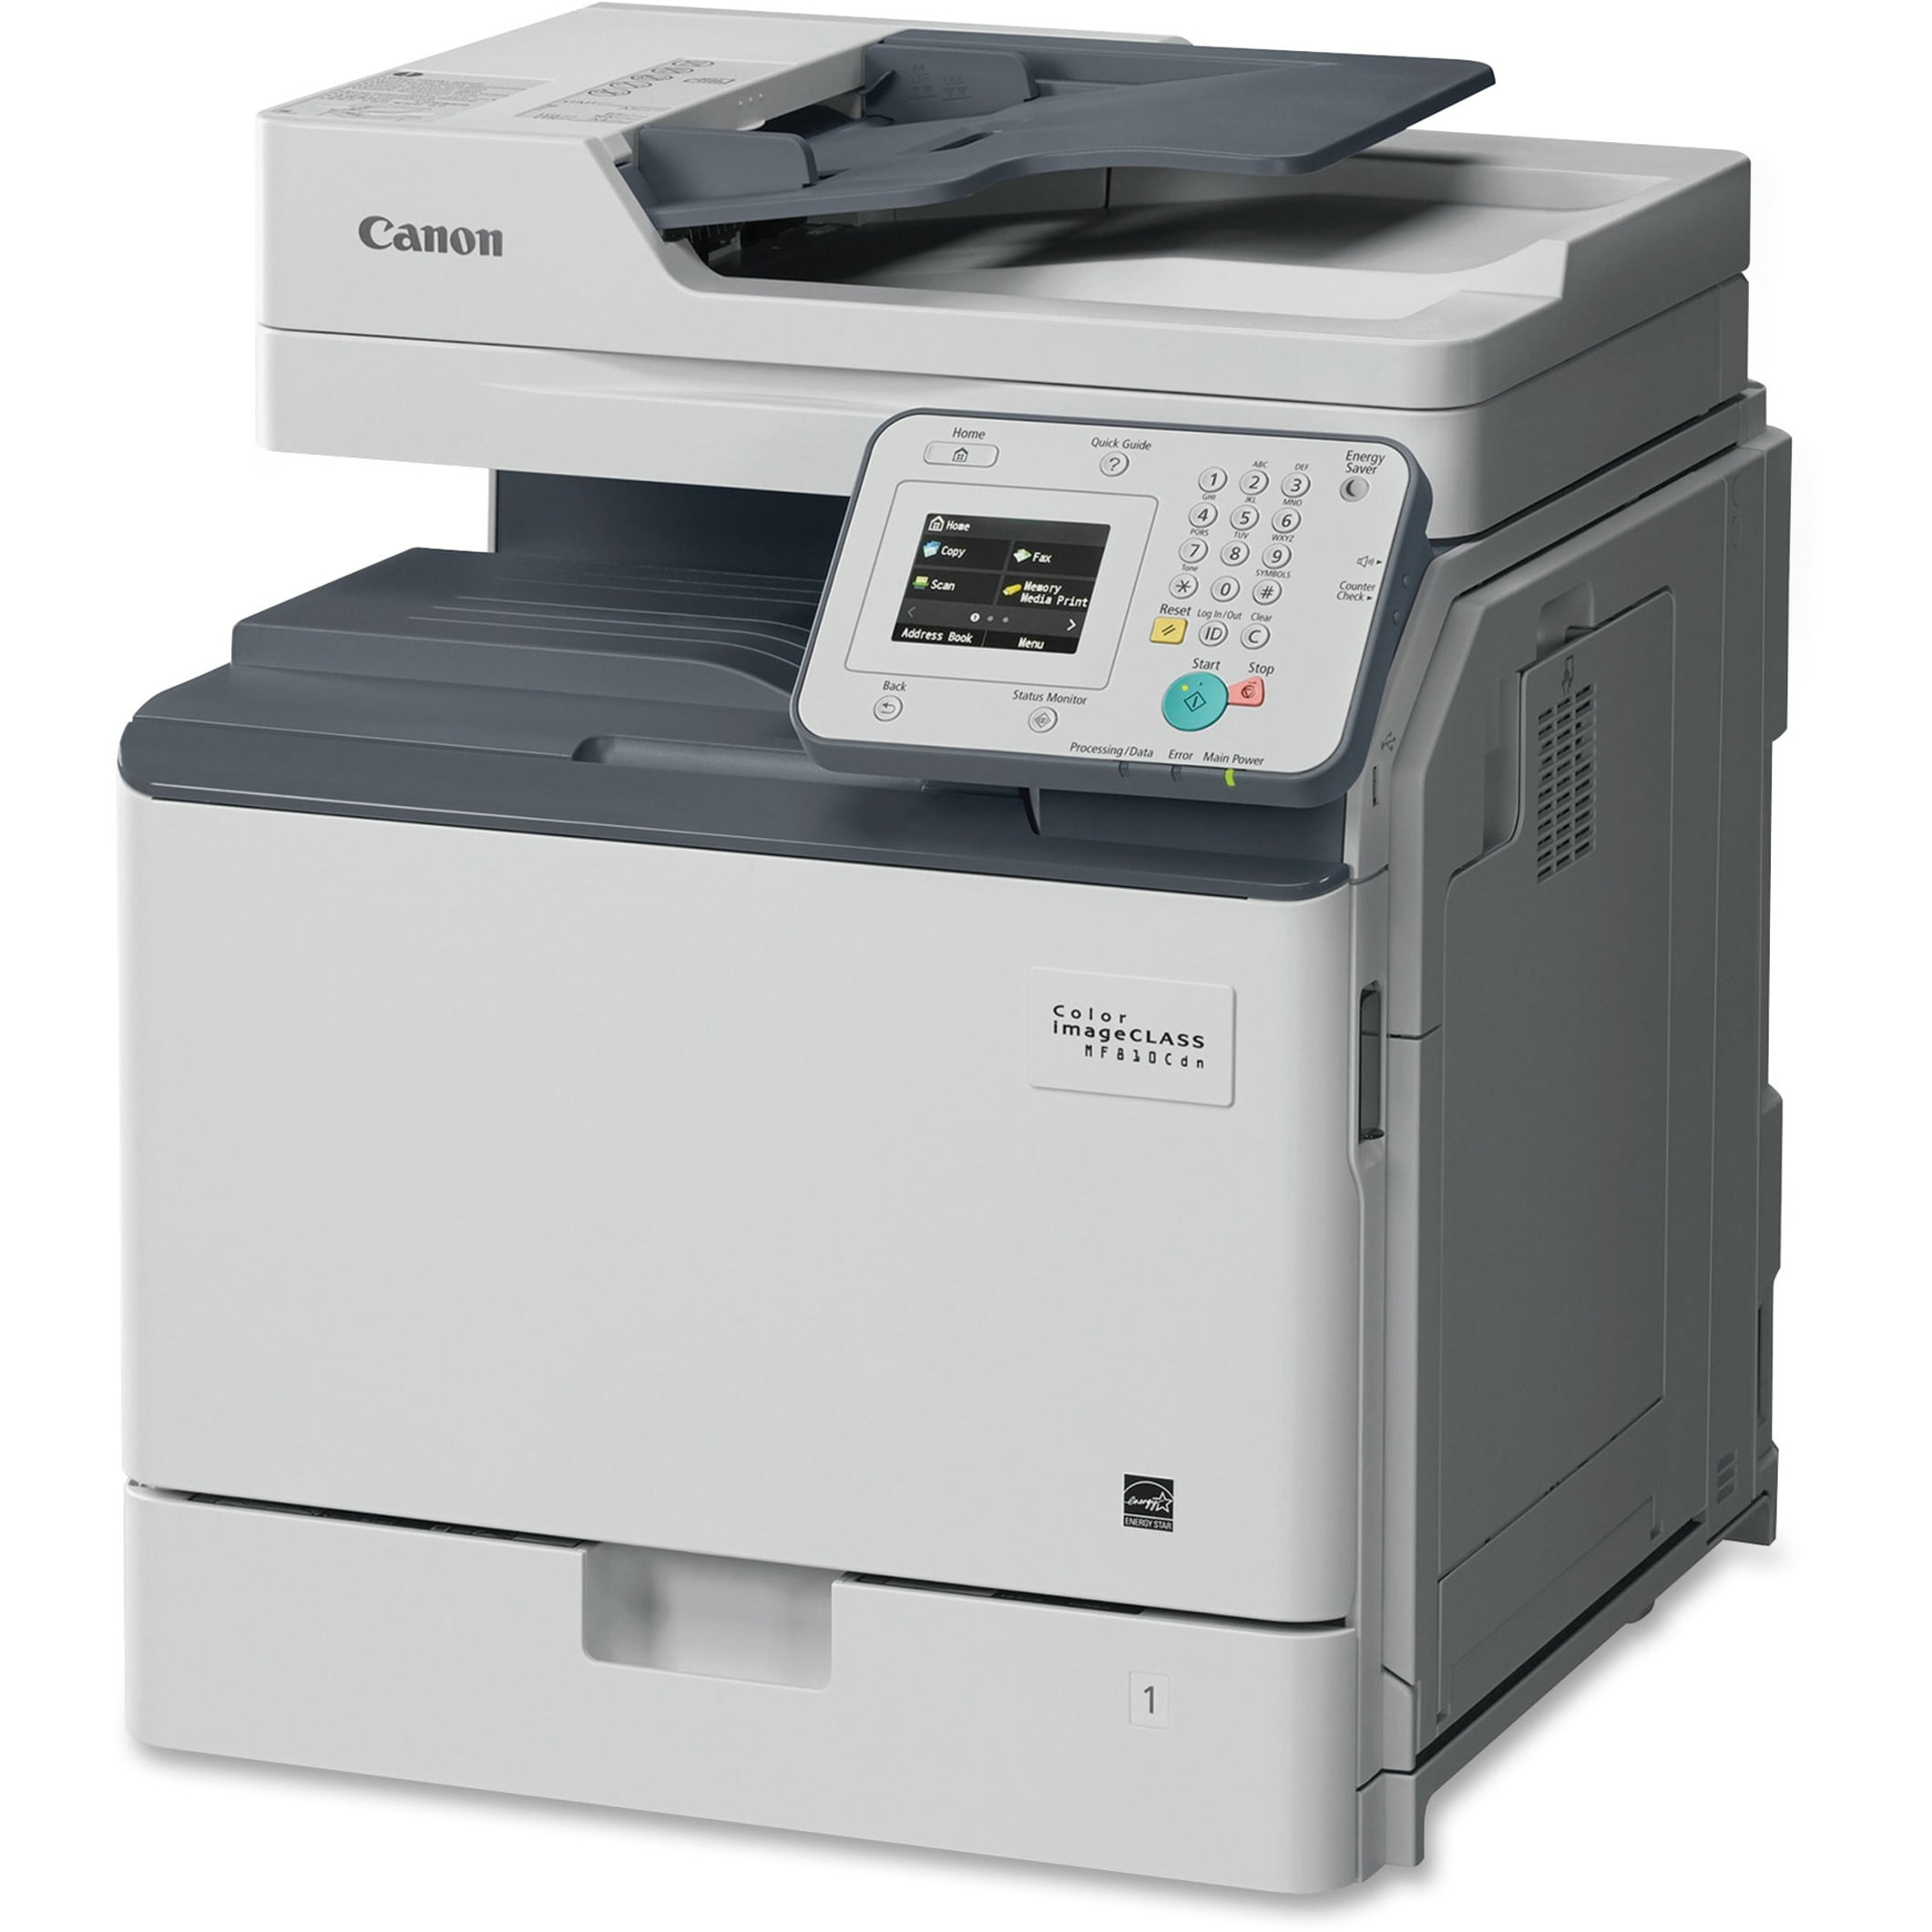 Color imageCLASS MF810Cdn Multifunction Laser Printer, Copy/Fax/Print/Scan - Walmart.com